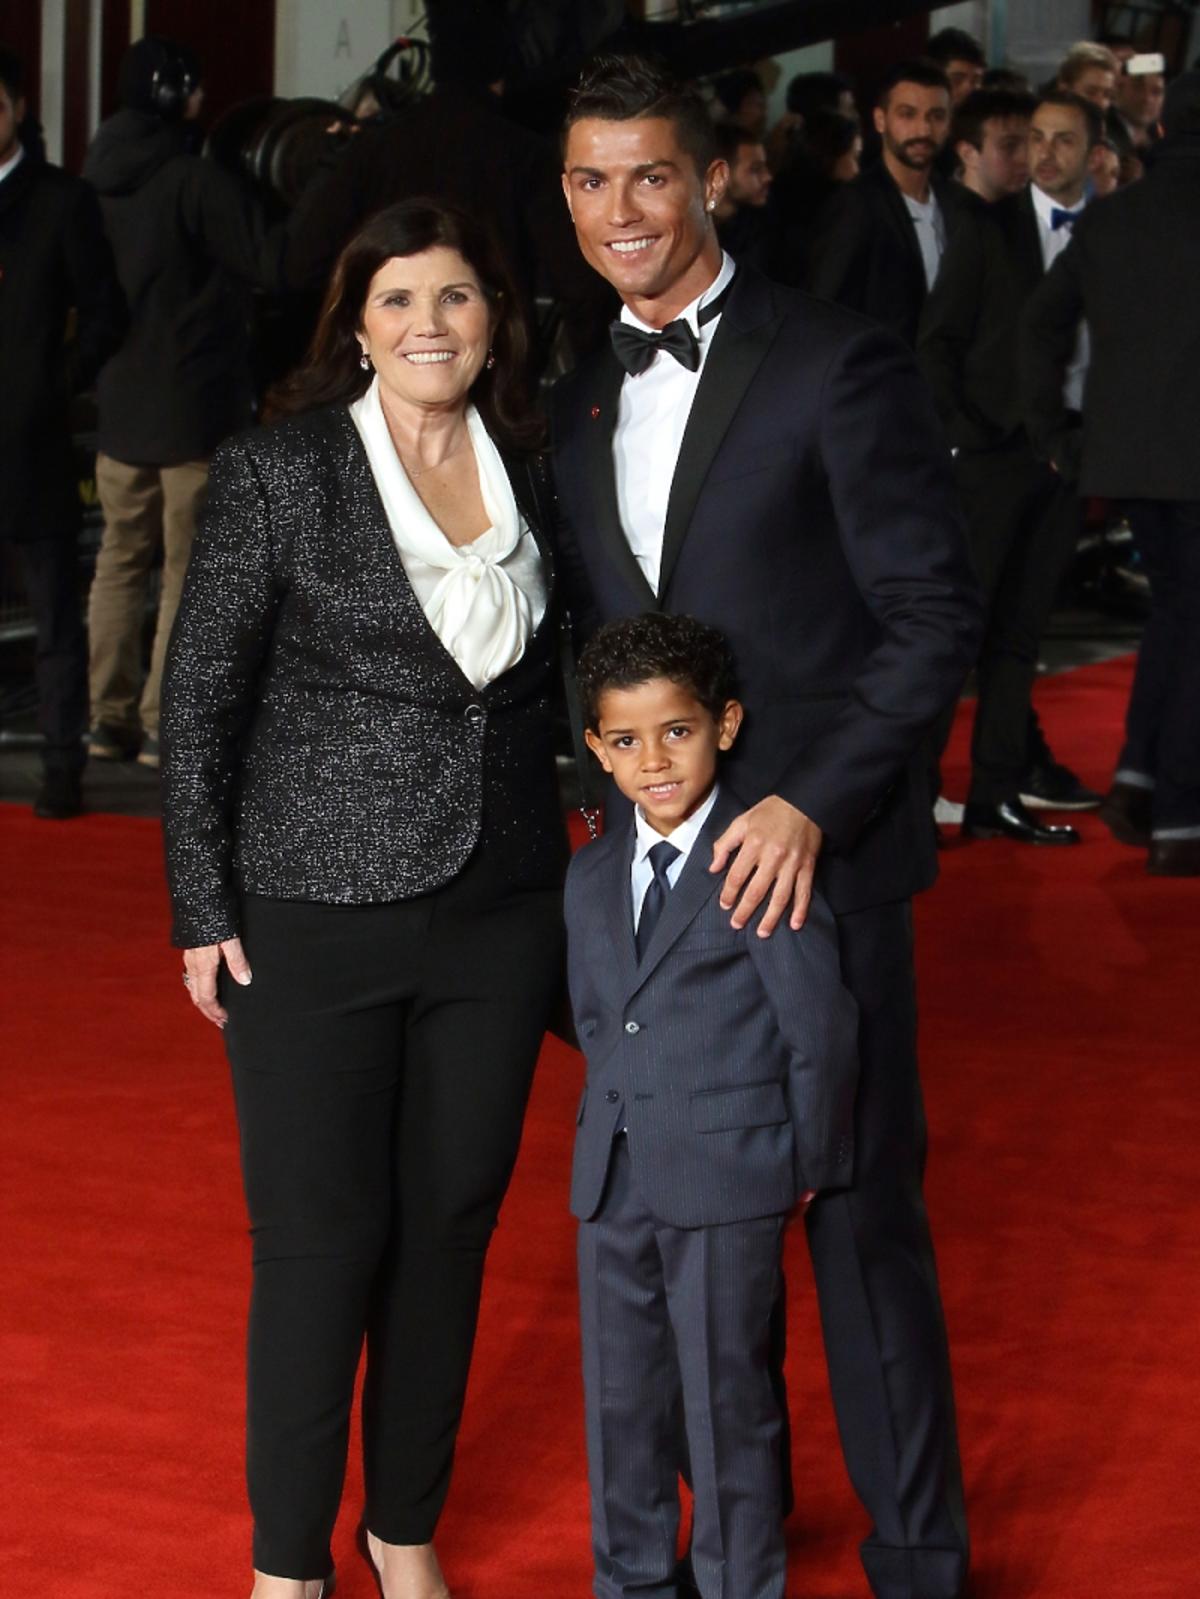 Cristiano Ronaldo w garniturze, syn Christiana Ronaldo w garniturze